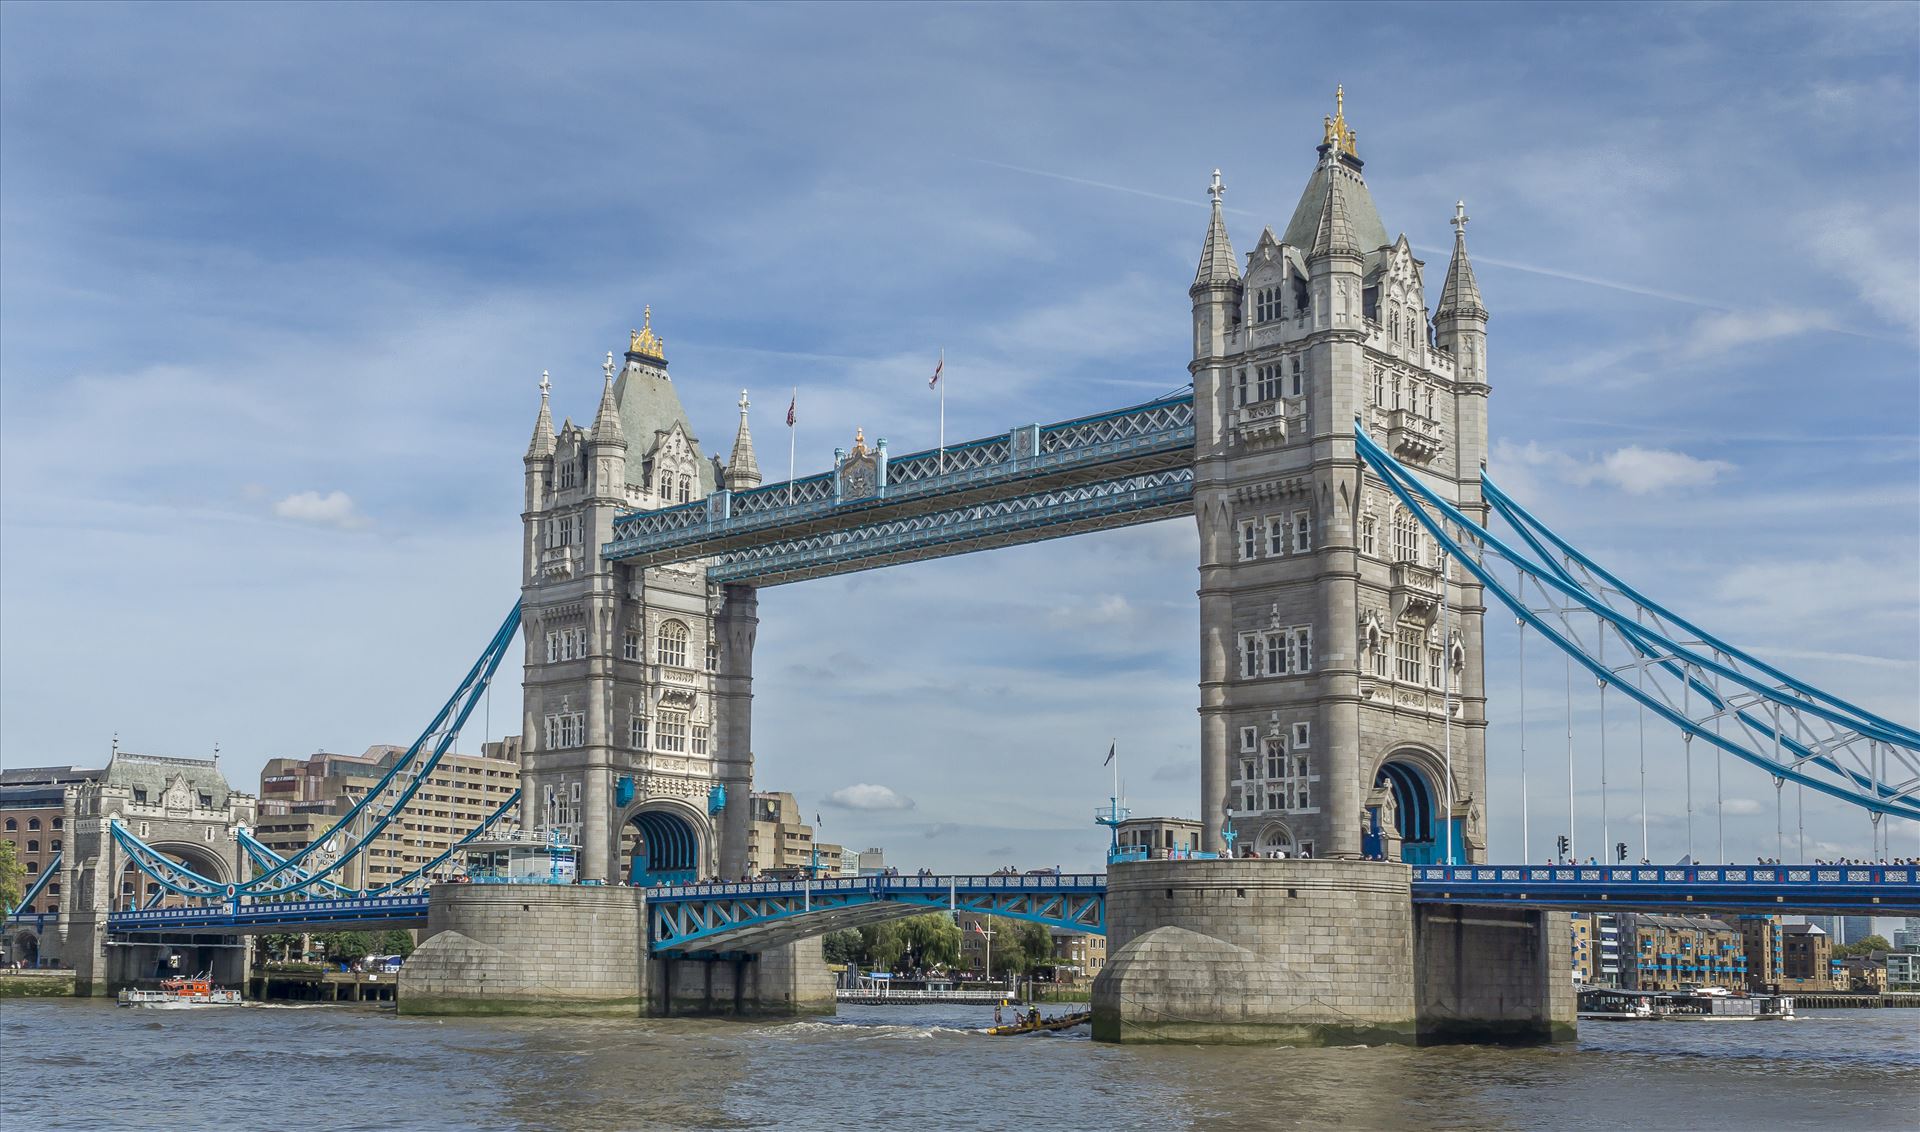 Tower Bridge - Tower Bridge in London, England by Buckmaster